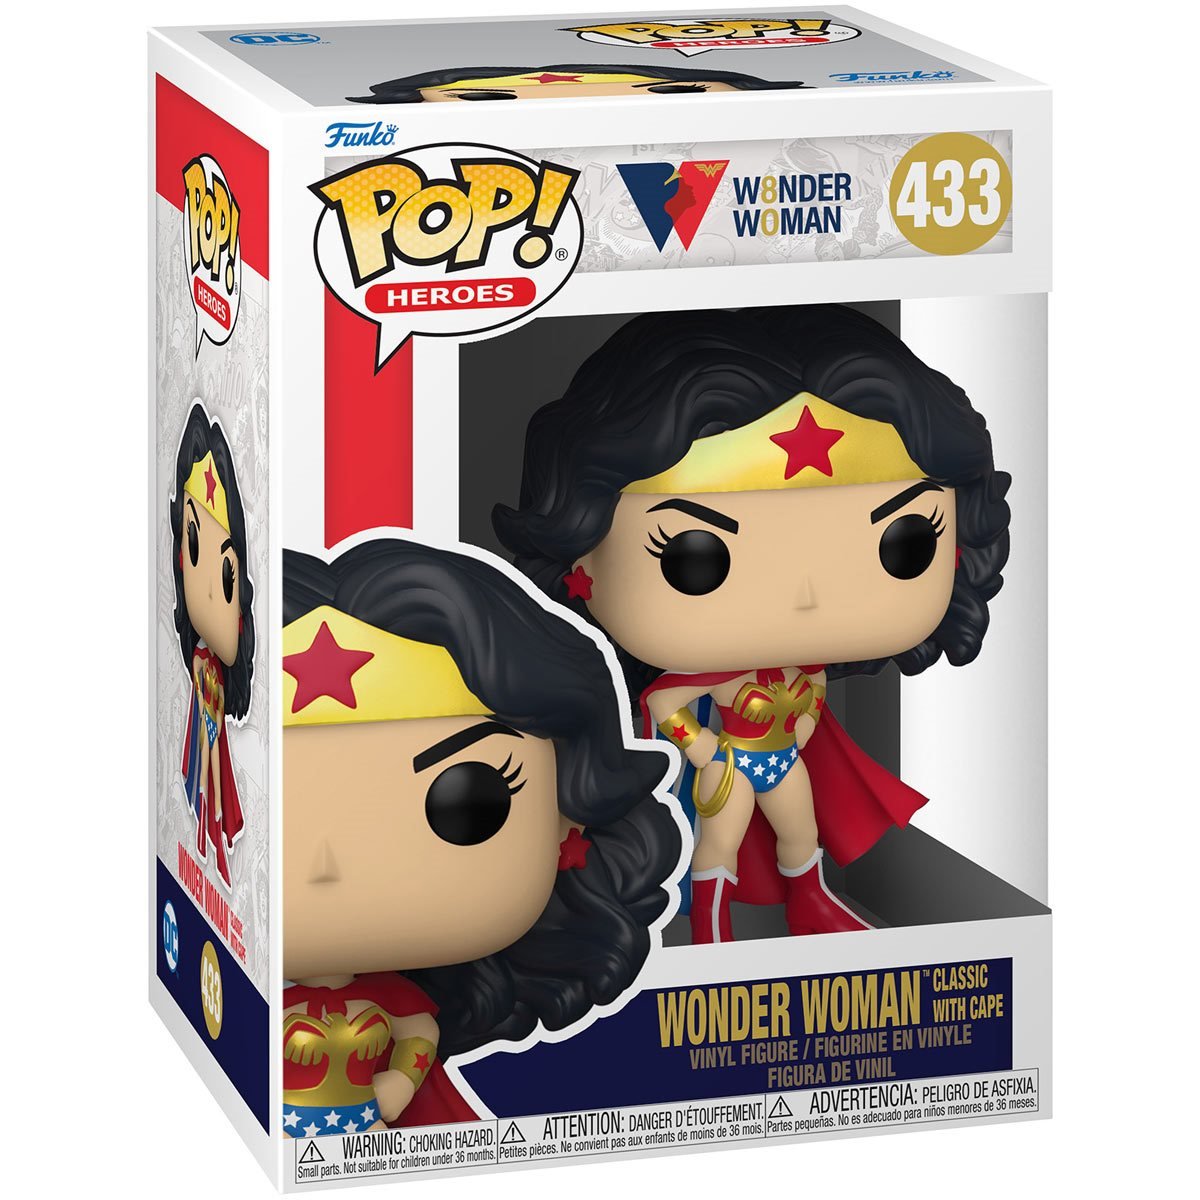 Funko Pop! Wonder Woman 80th Anniversary Classic with Cape